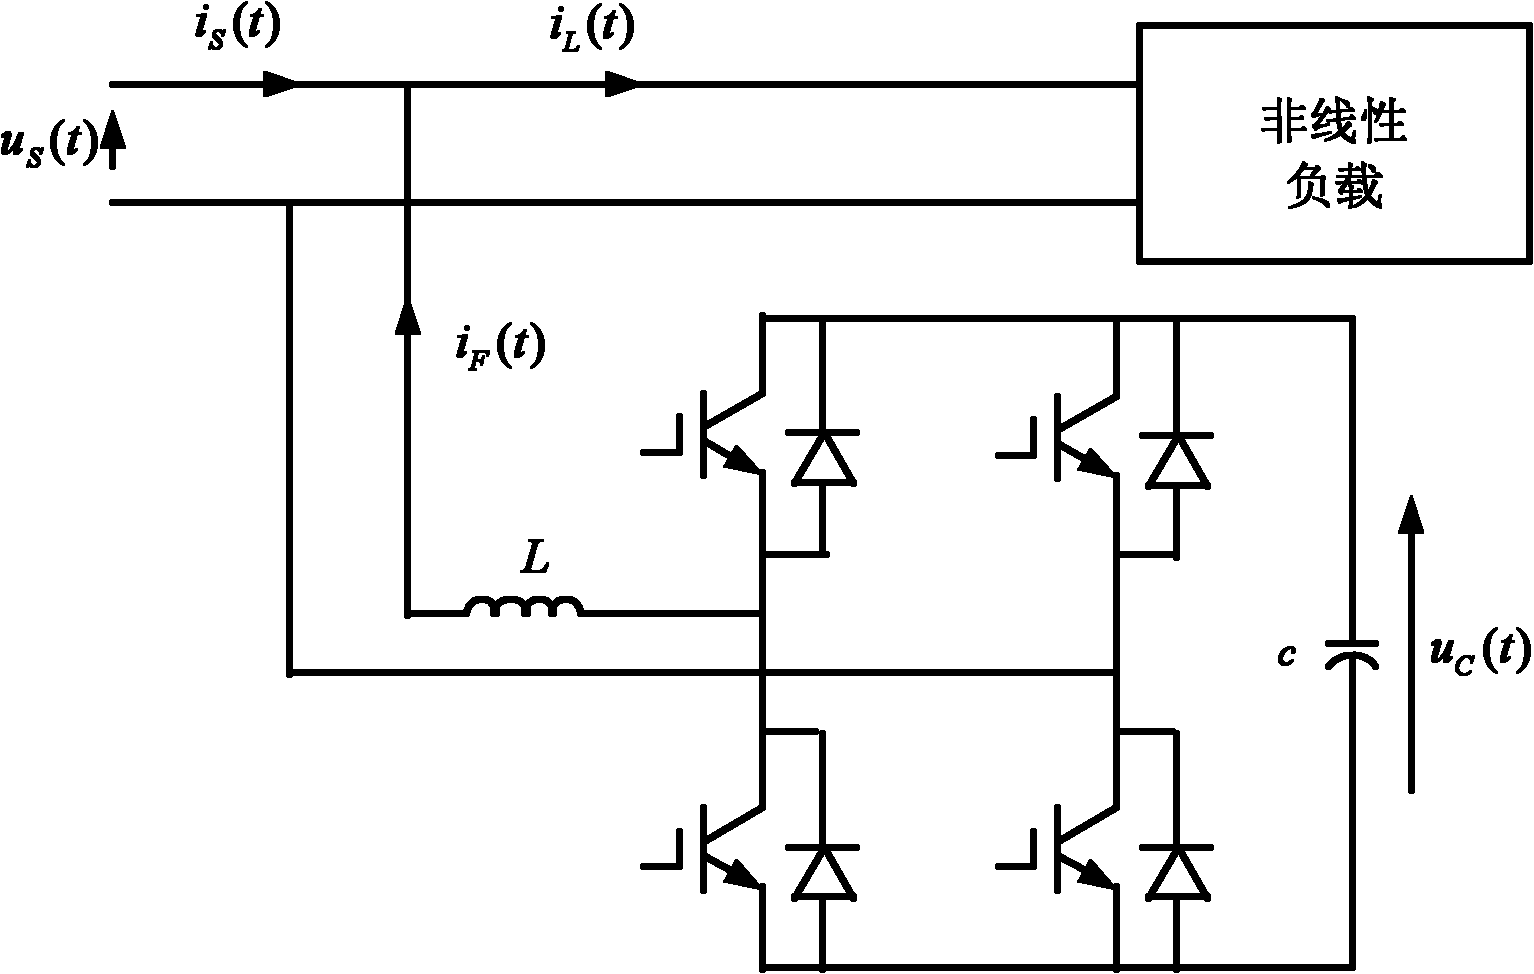 Direct current voltage on-line identification method for active filter